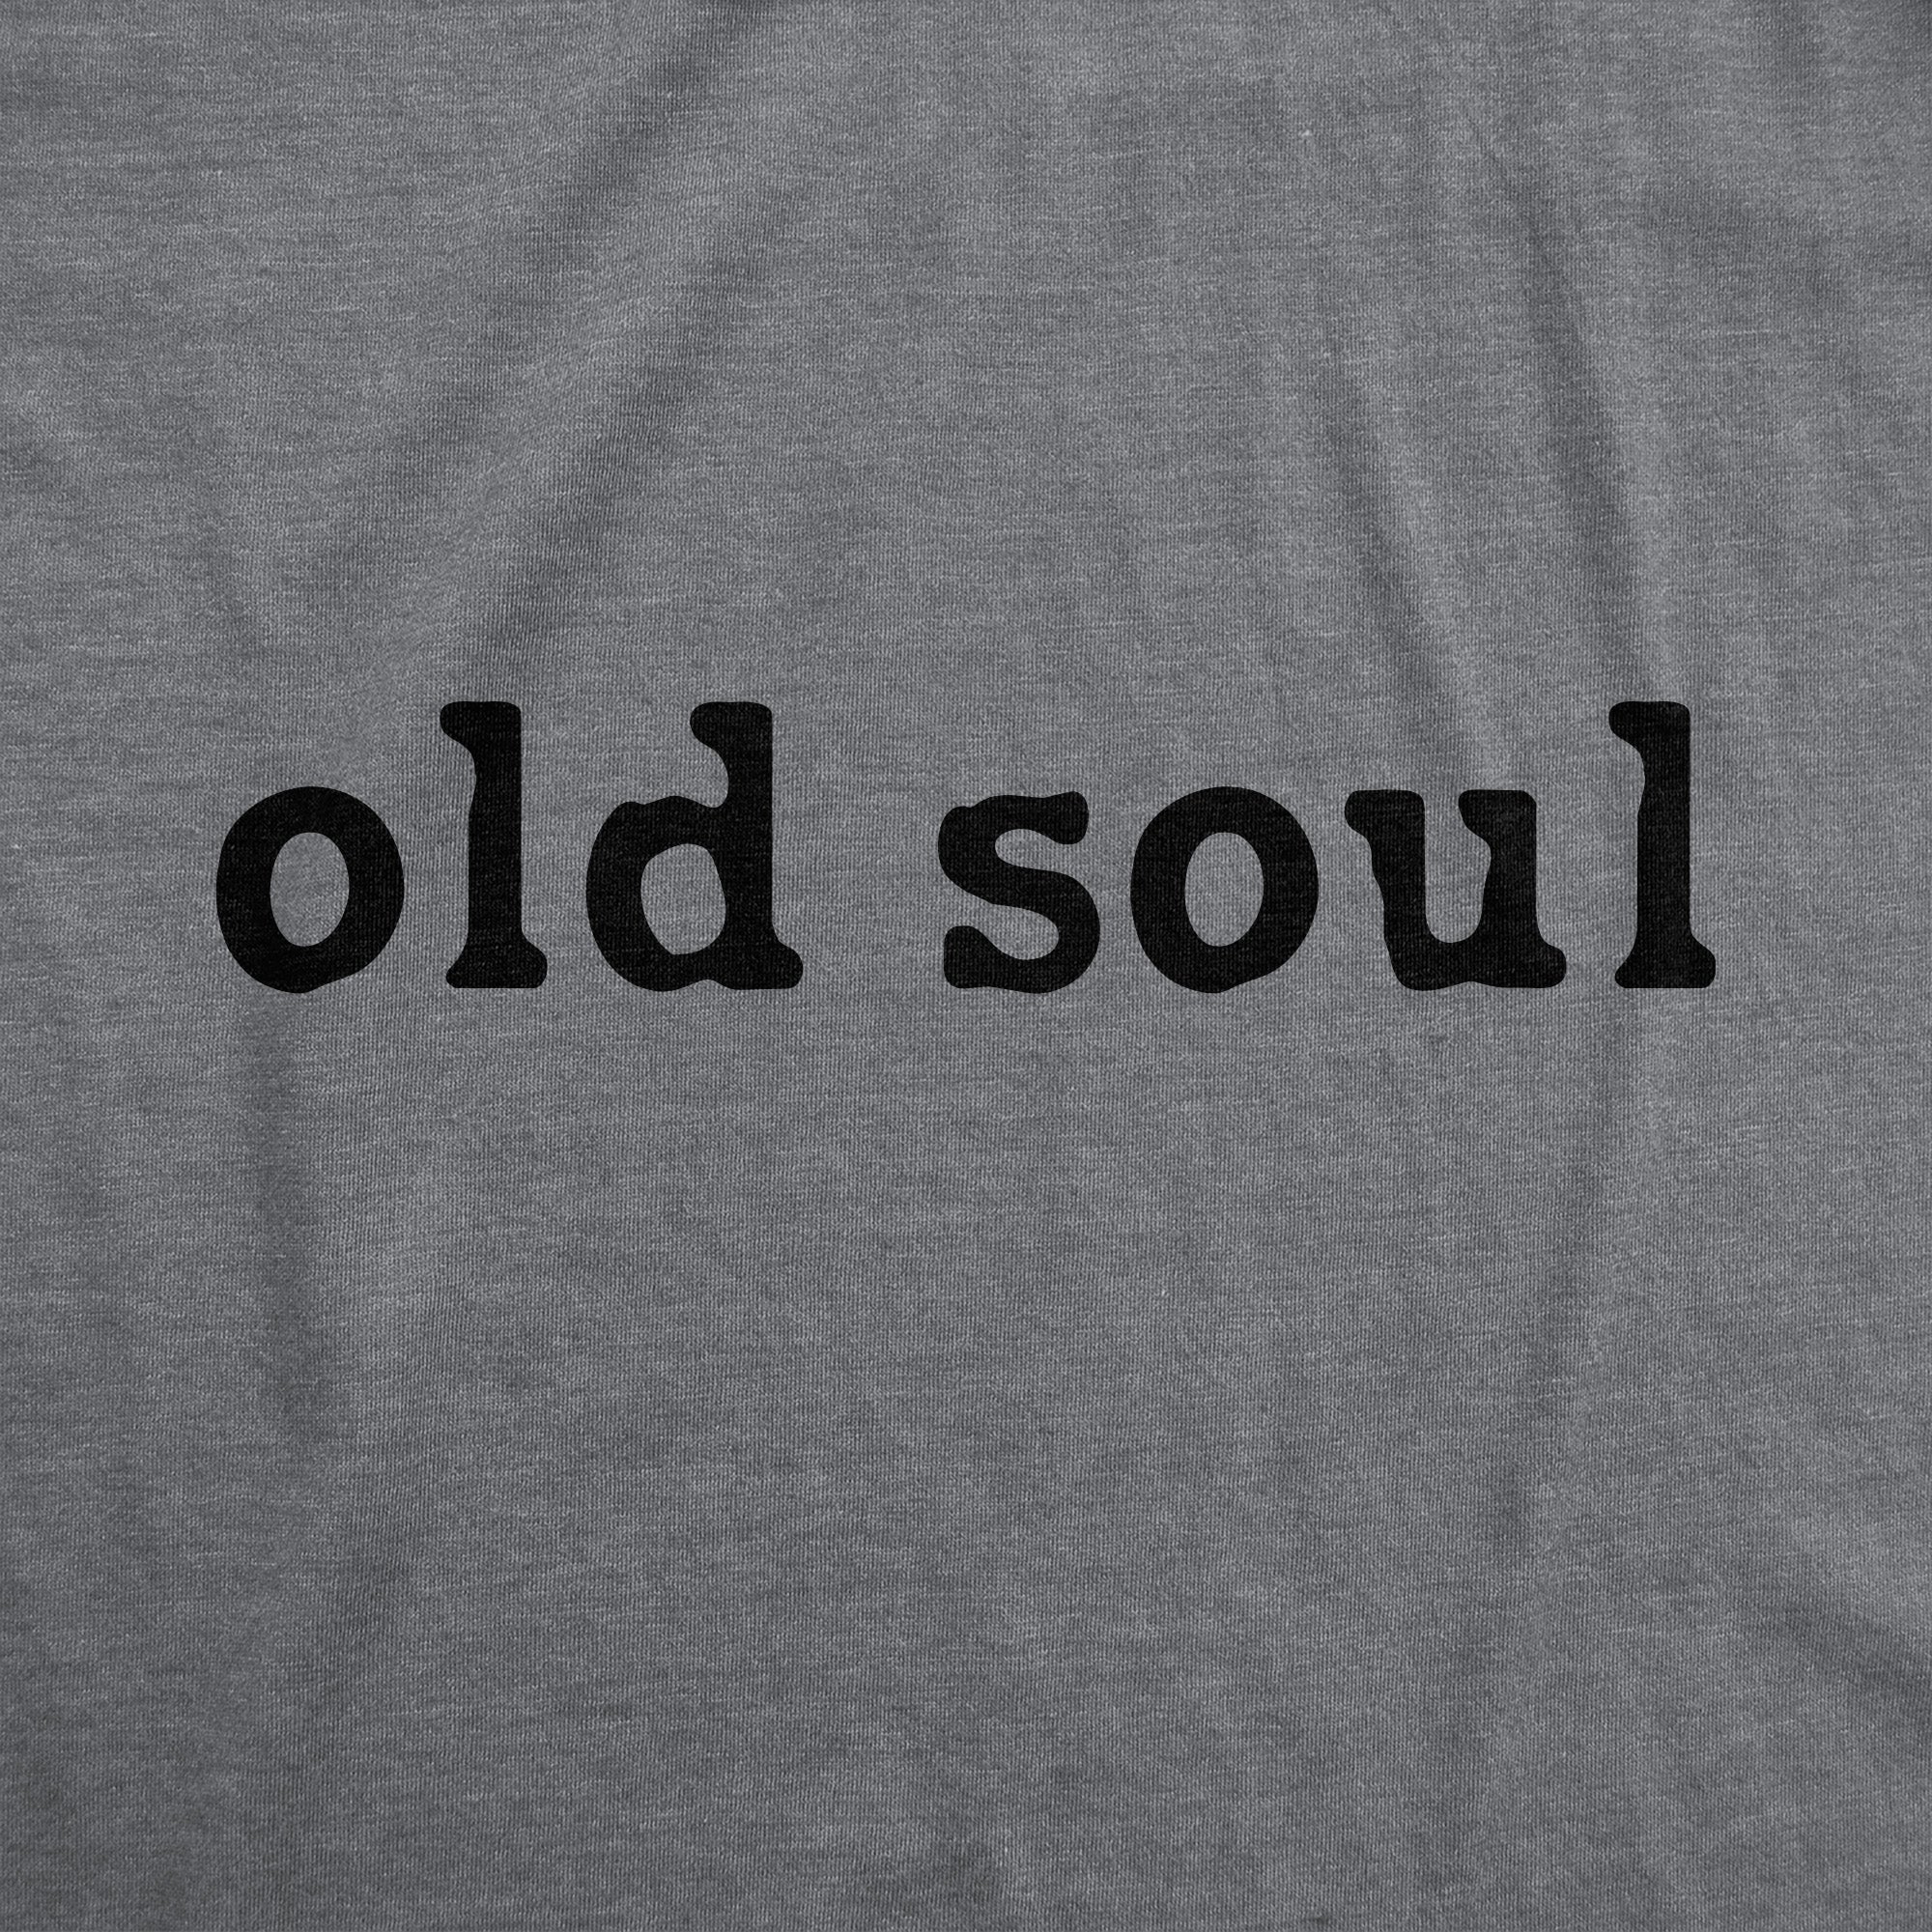 Funny Dark Heather Grey - SOUL Old Soul Mens T Shirt Nerdy retro Tee